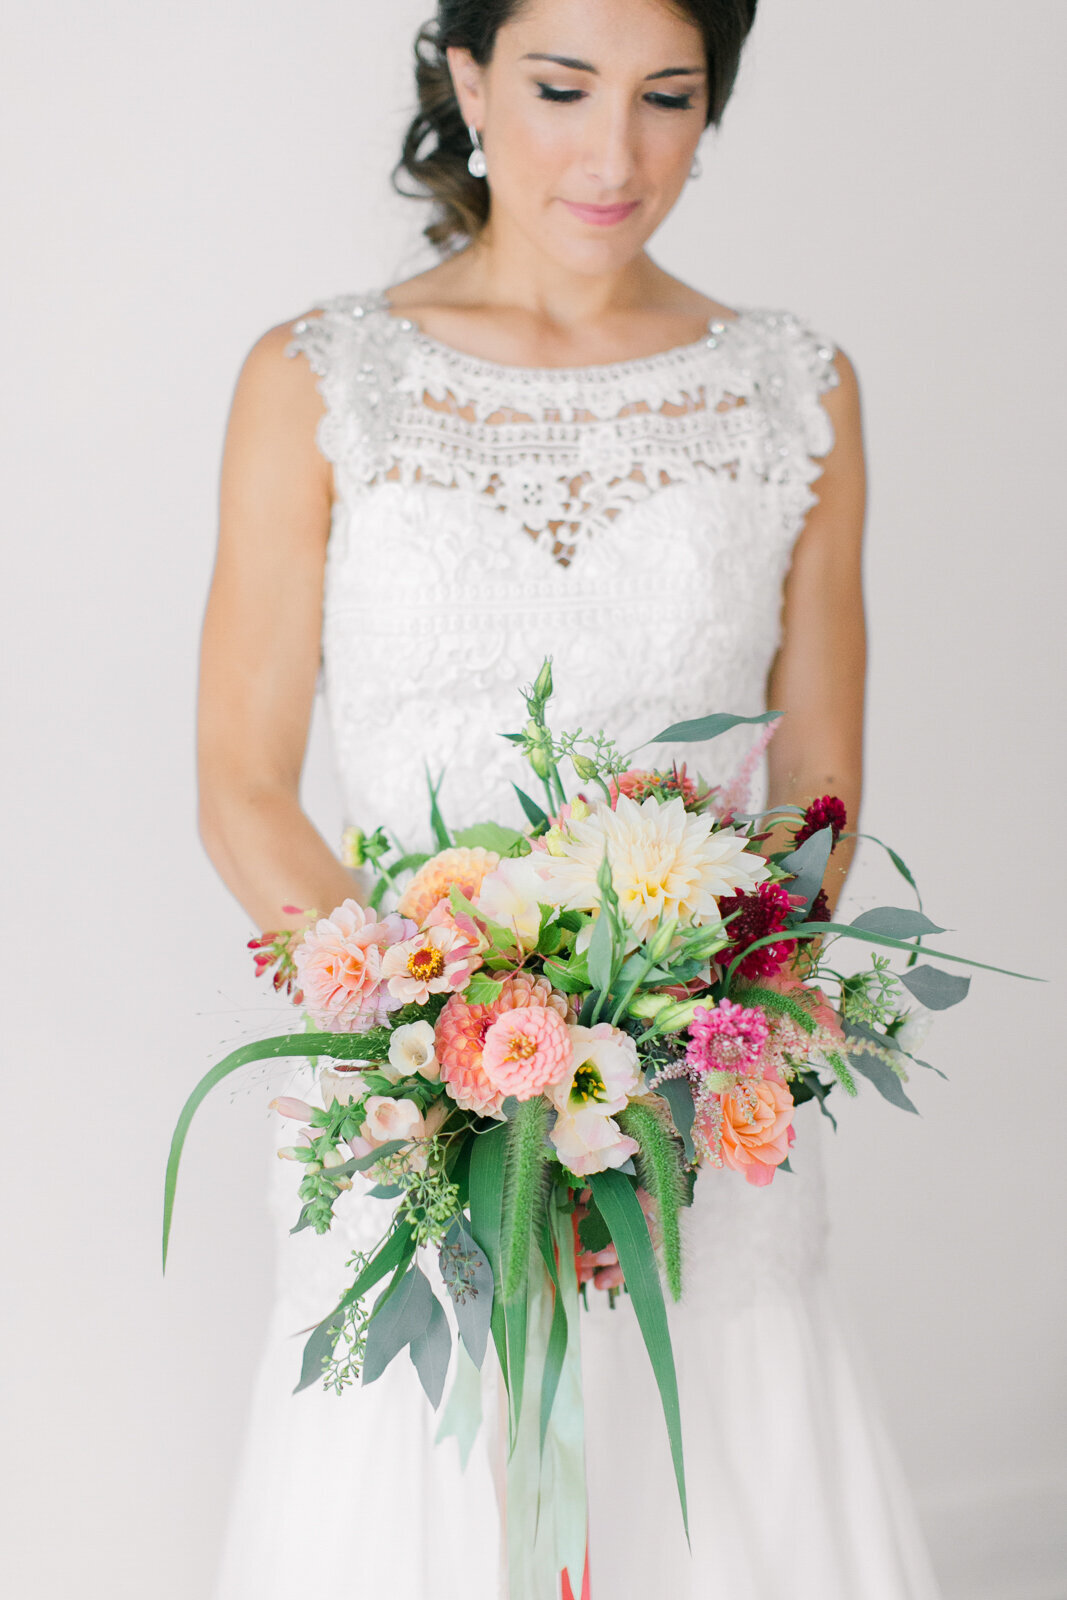 Atelier-Carmel-Wedding-Florist-GALLERY-Bridal-2